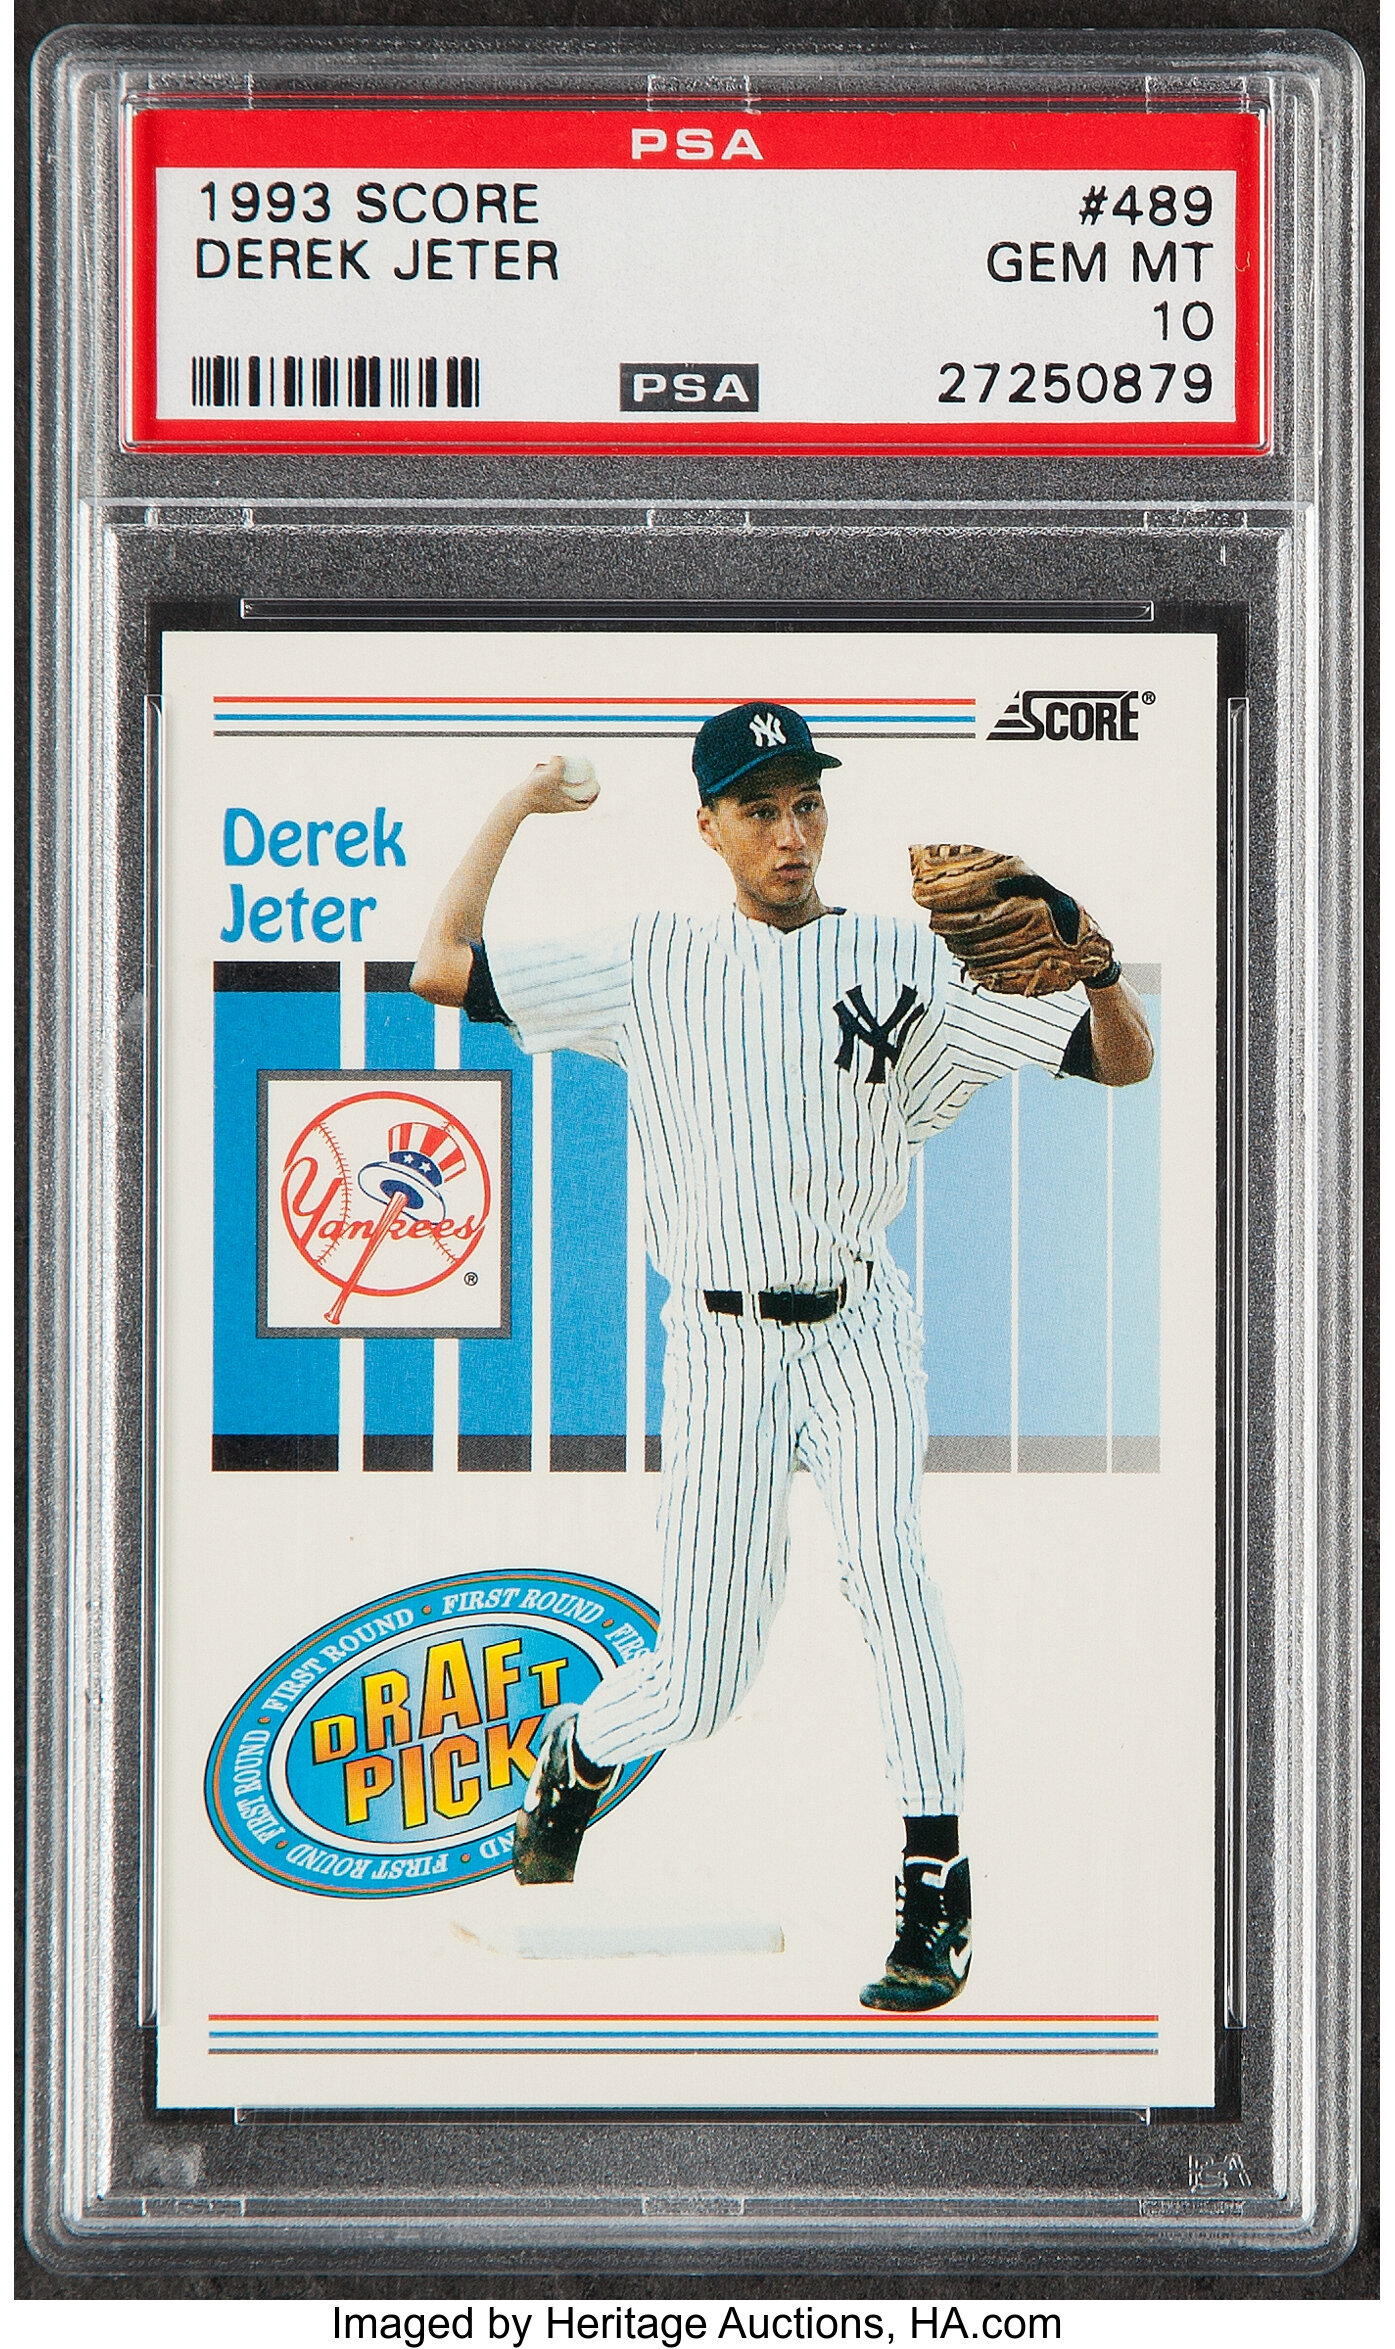 1993 Score Derek Jeter (Draft Pick) #489 PSA Gem Mint 10., Lot #43069